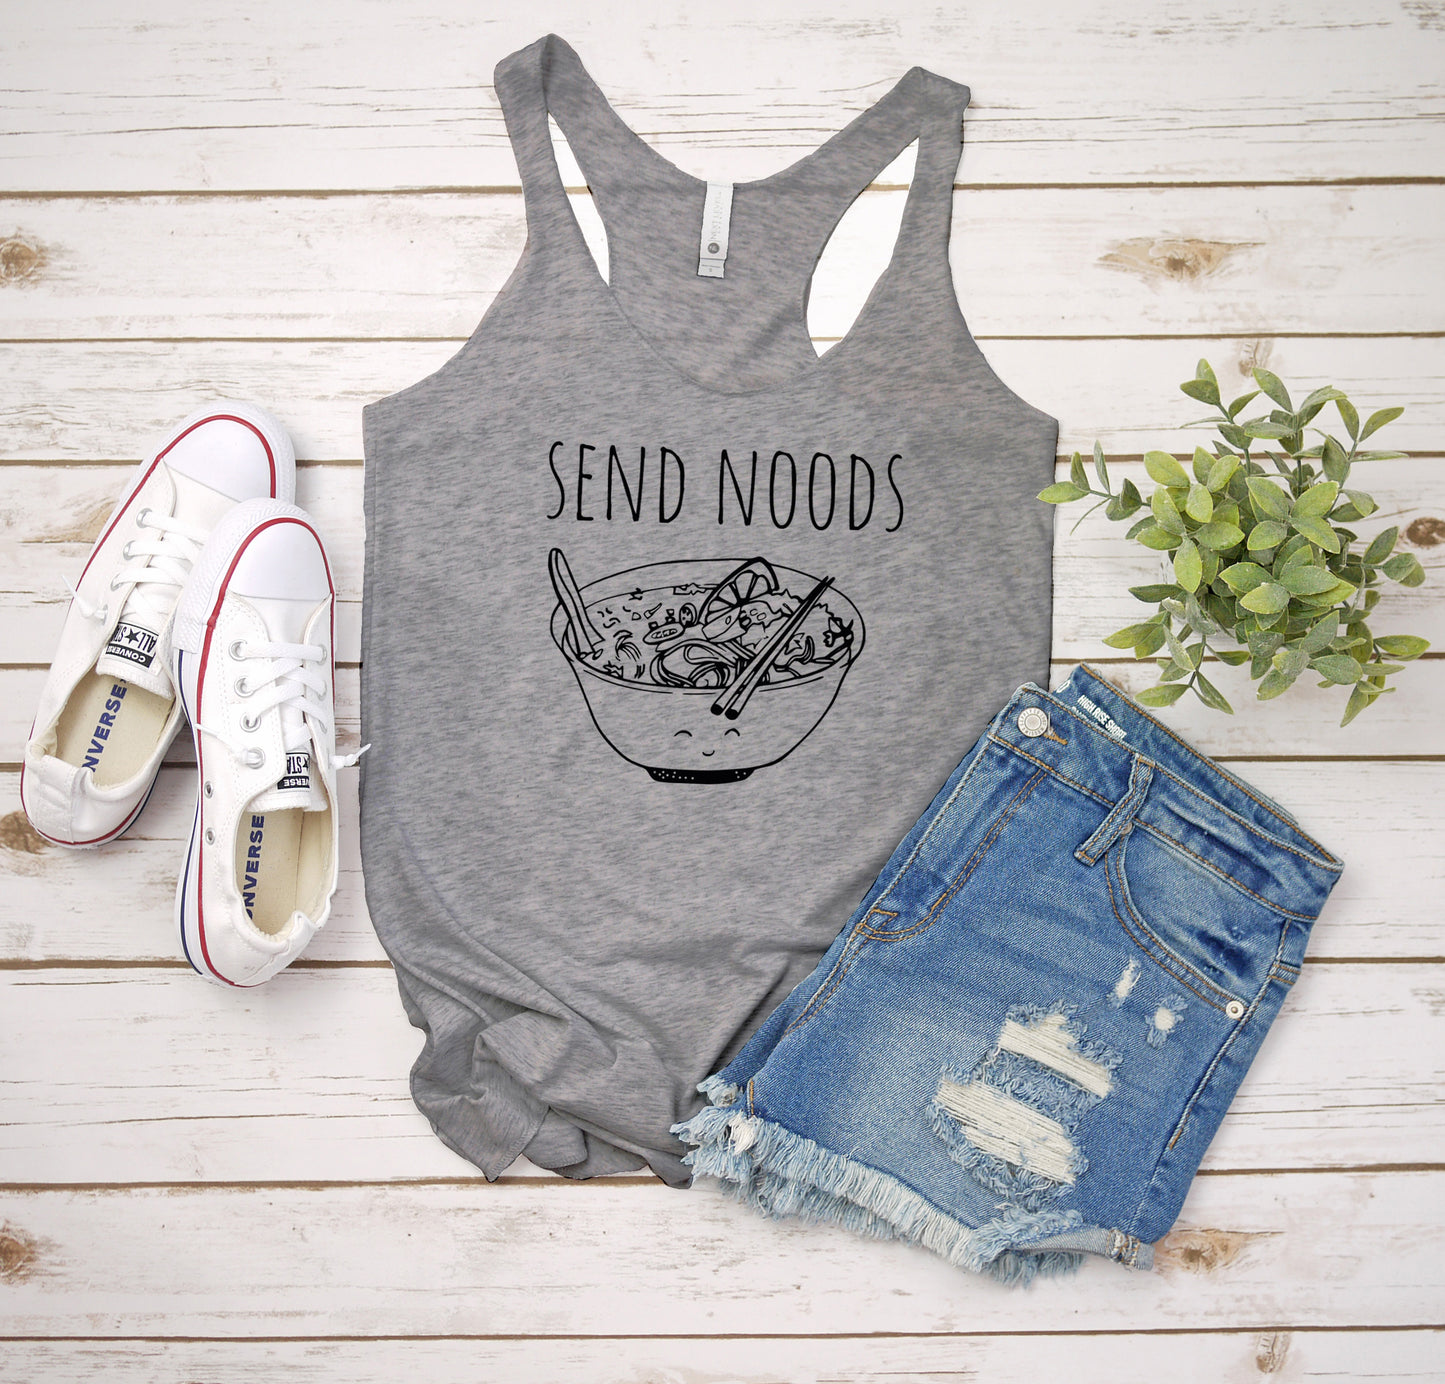 Send Noods - Women's Tank - Heather Gray, Tahiti, or Envy